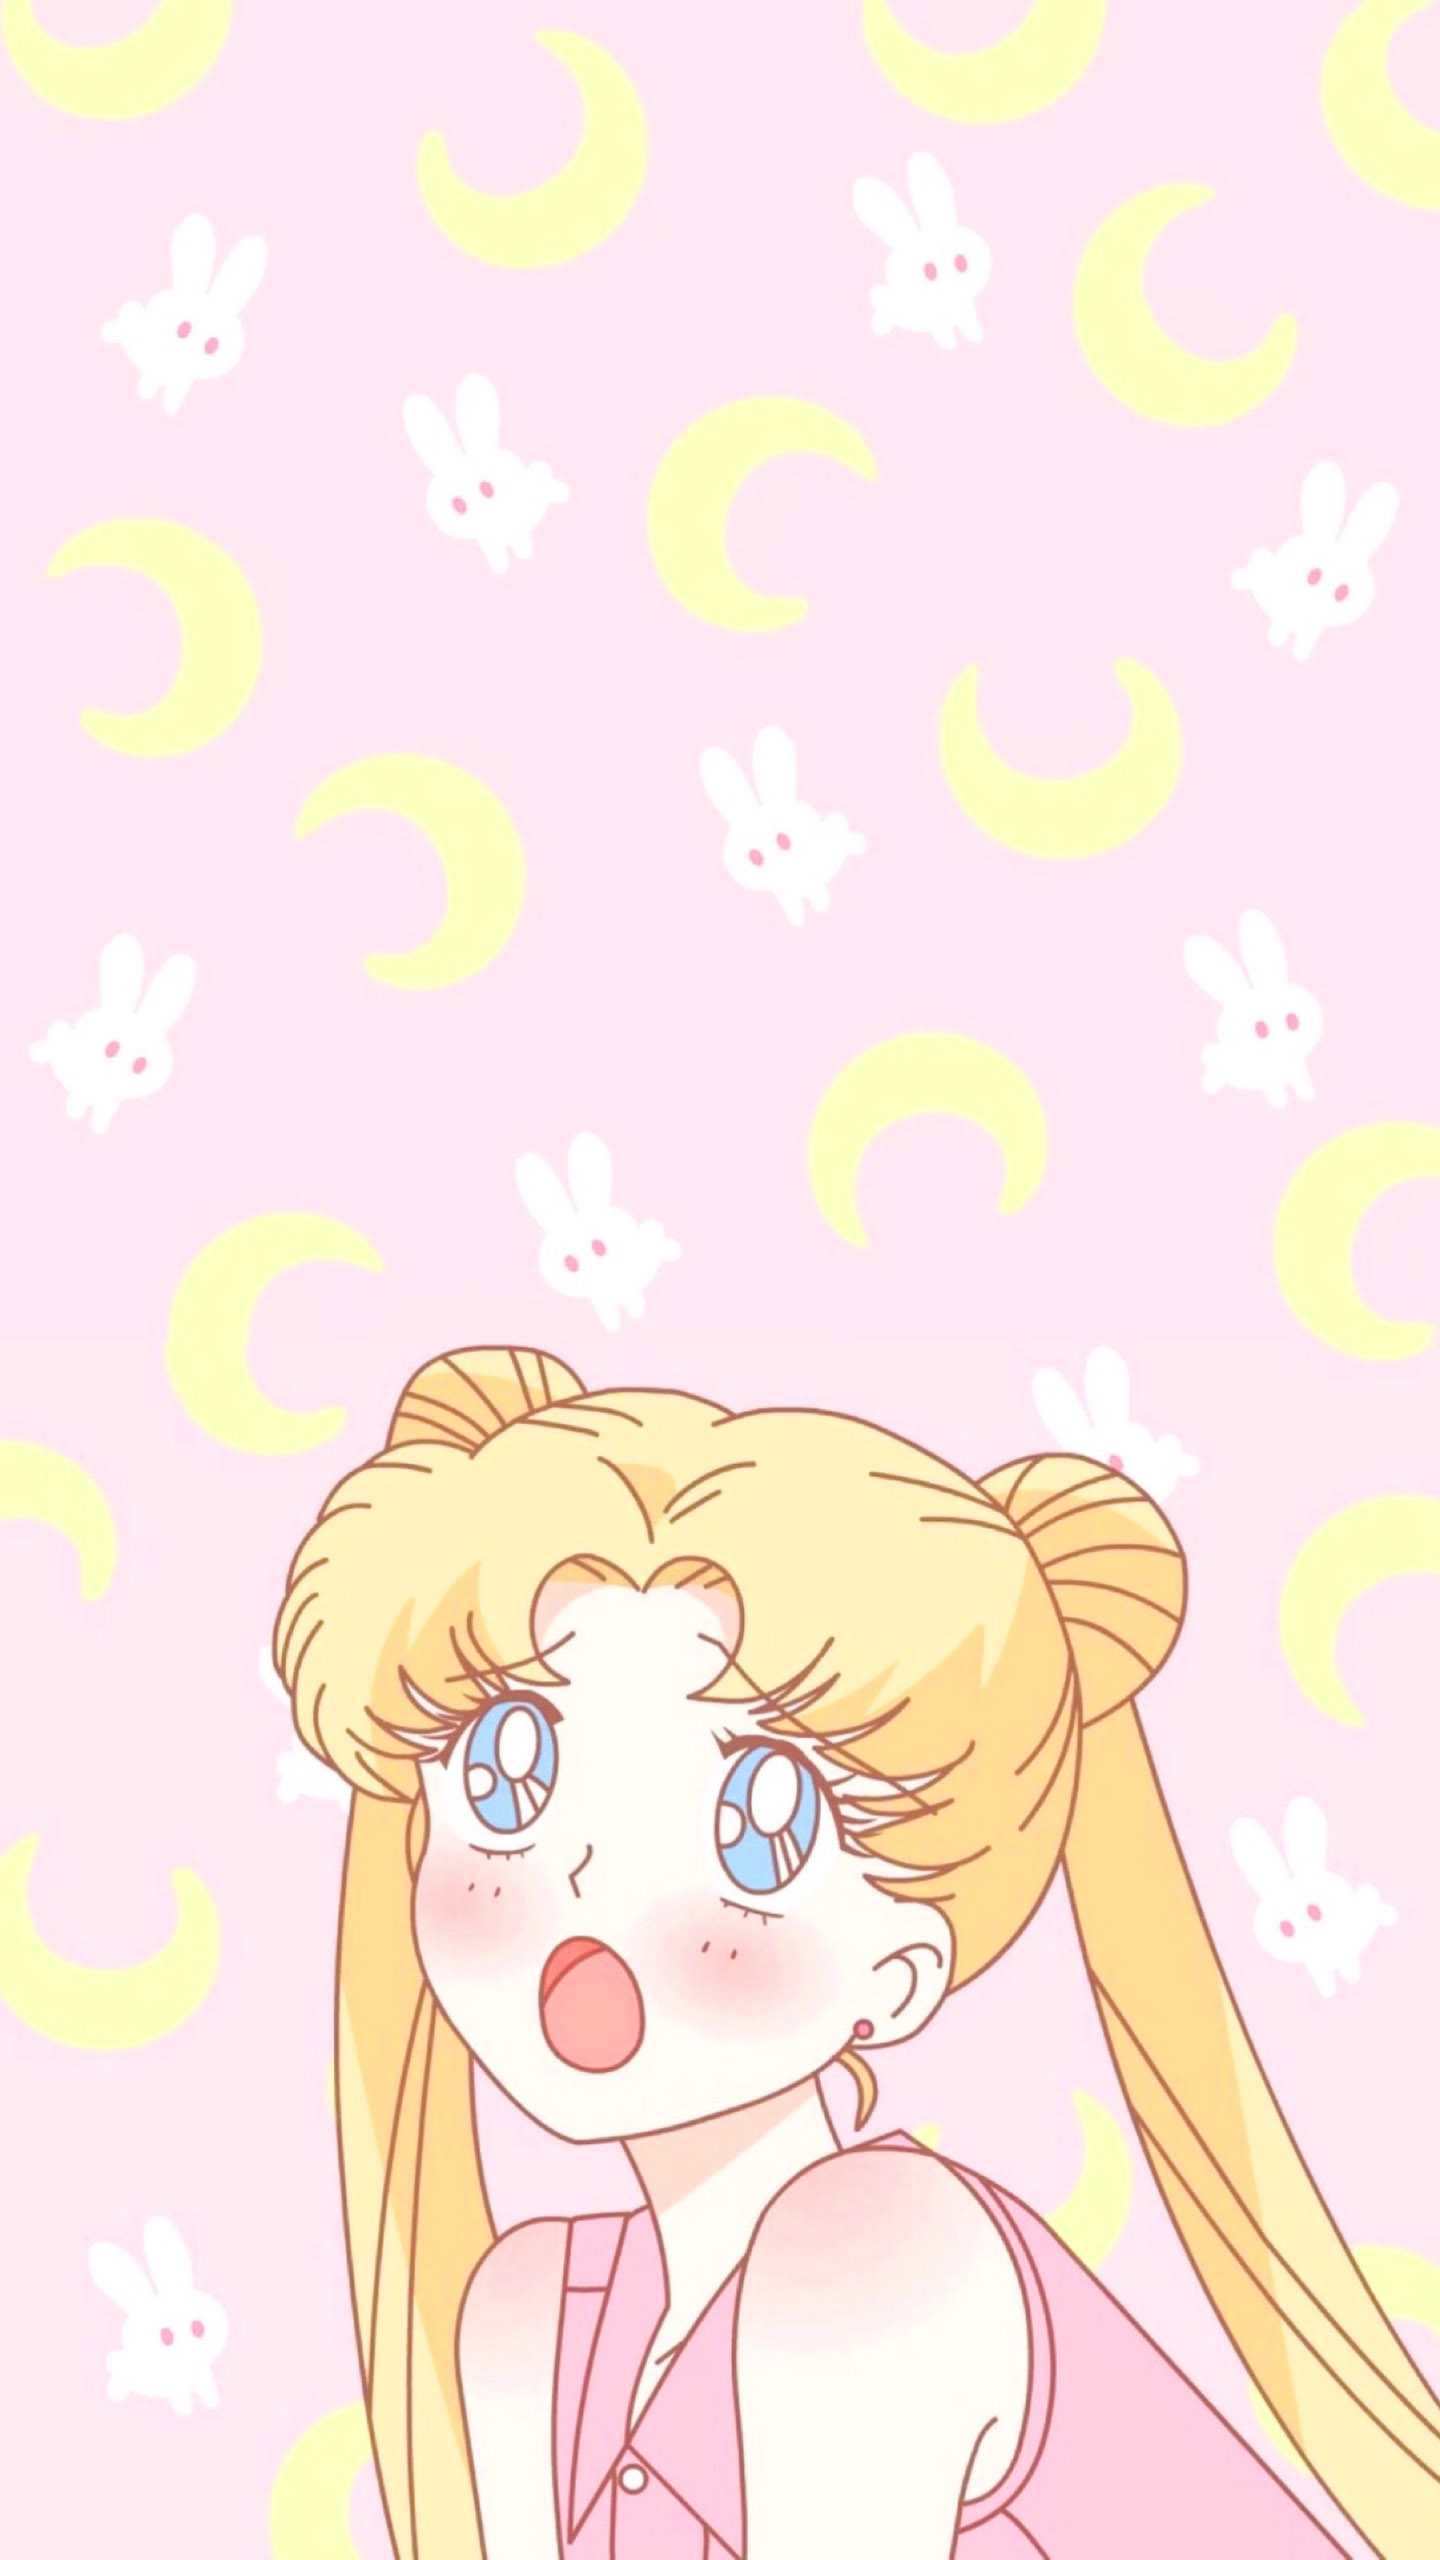 Sailor moon wallpaper for phone aesthetic anime background for phone cute wallpaper for phone aesthetic background for phone - Sailor Moon